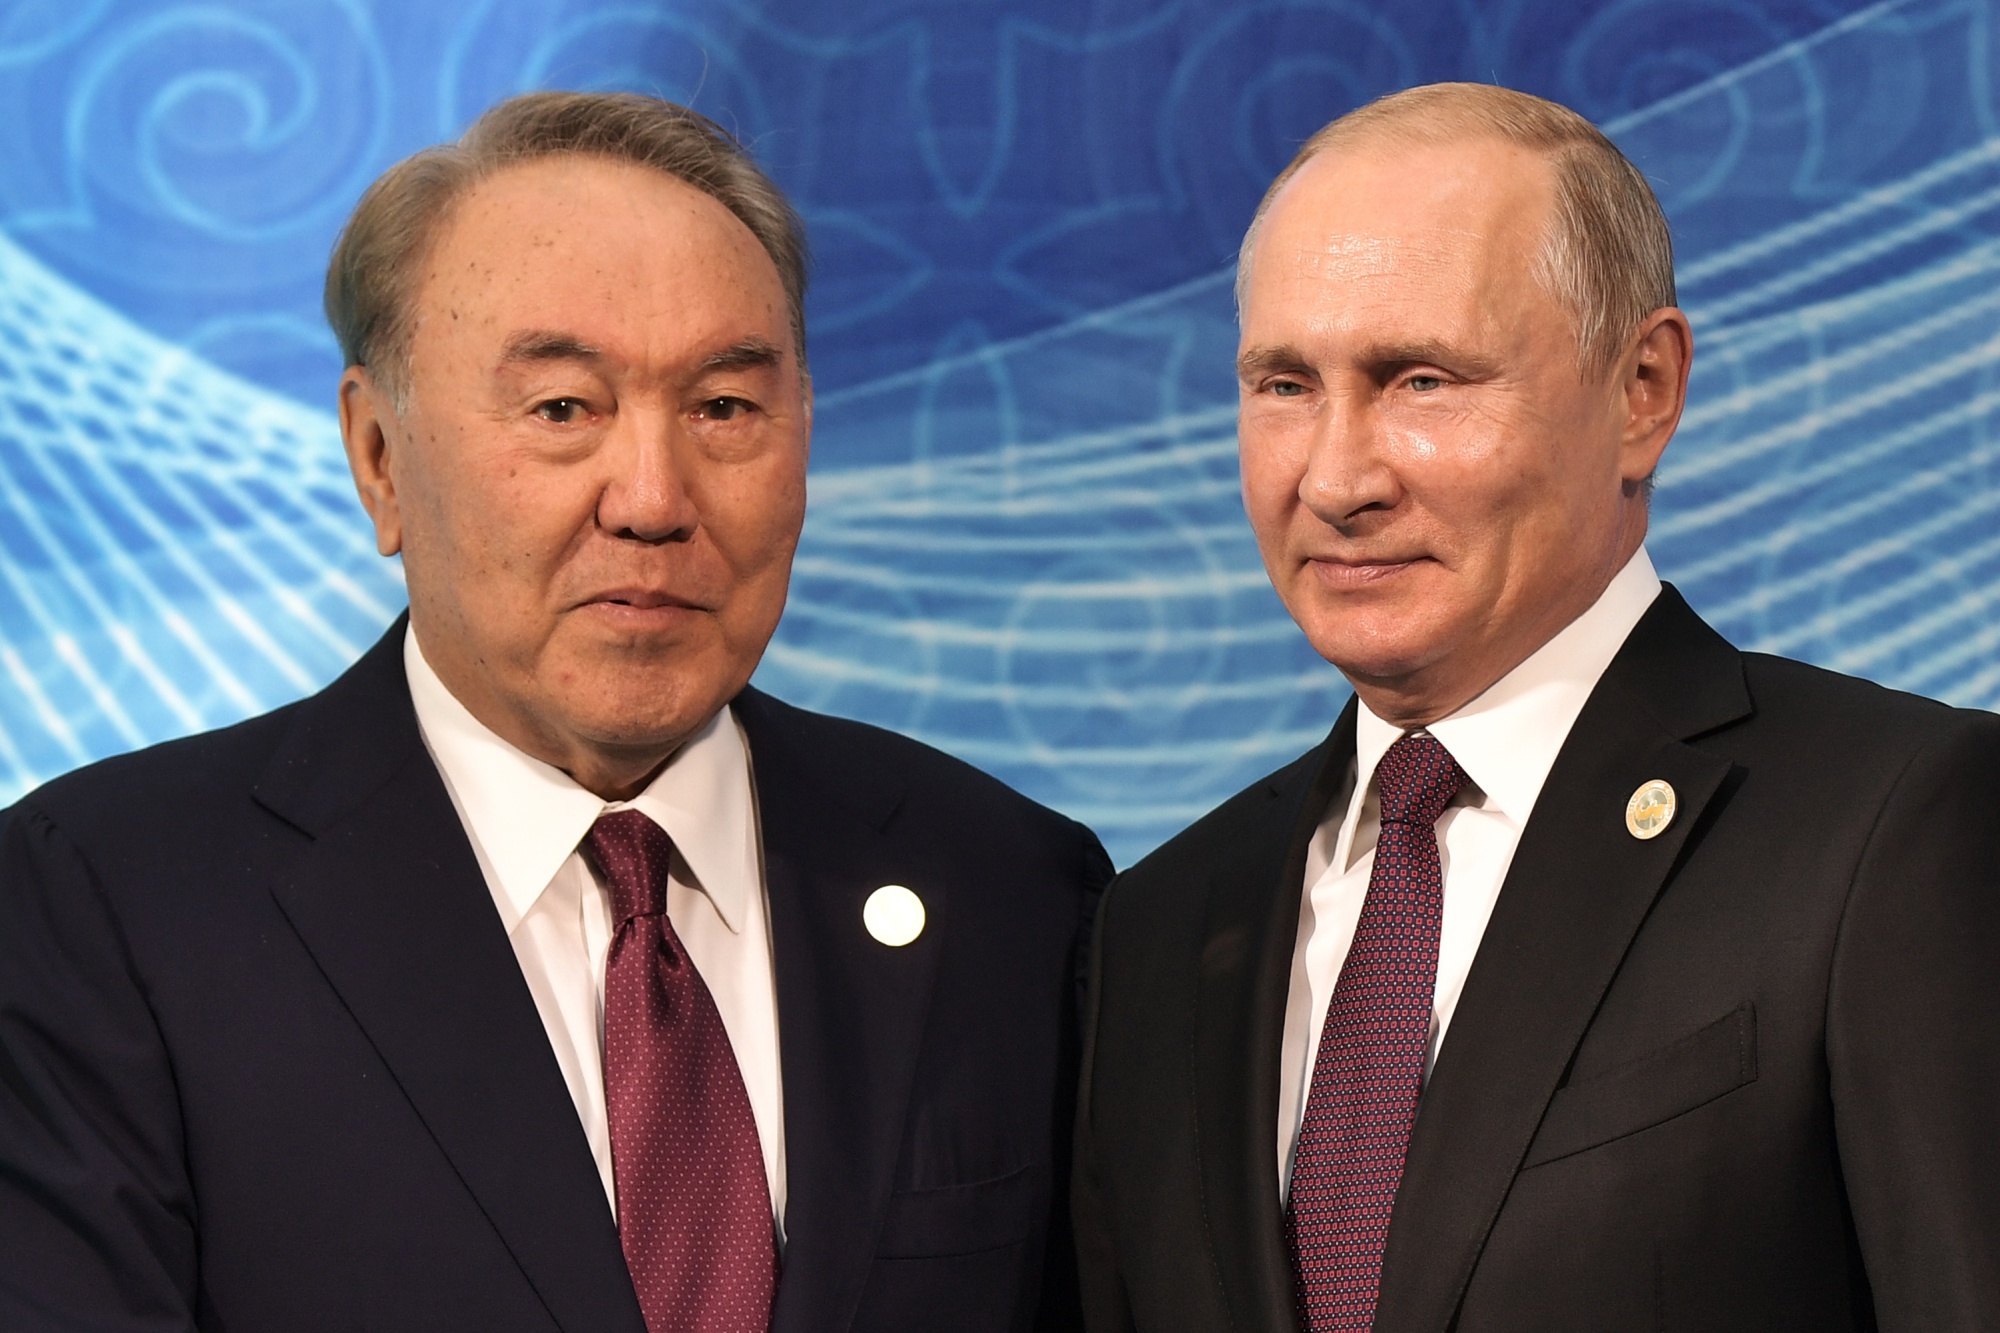 Vladimir Putin, right, with Nursultan Nazarbayev. Photographer: Alexey Nikolsky/Sputnik/AFP via Getty Images